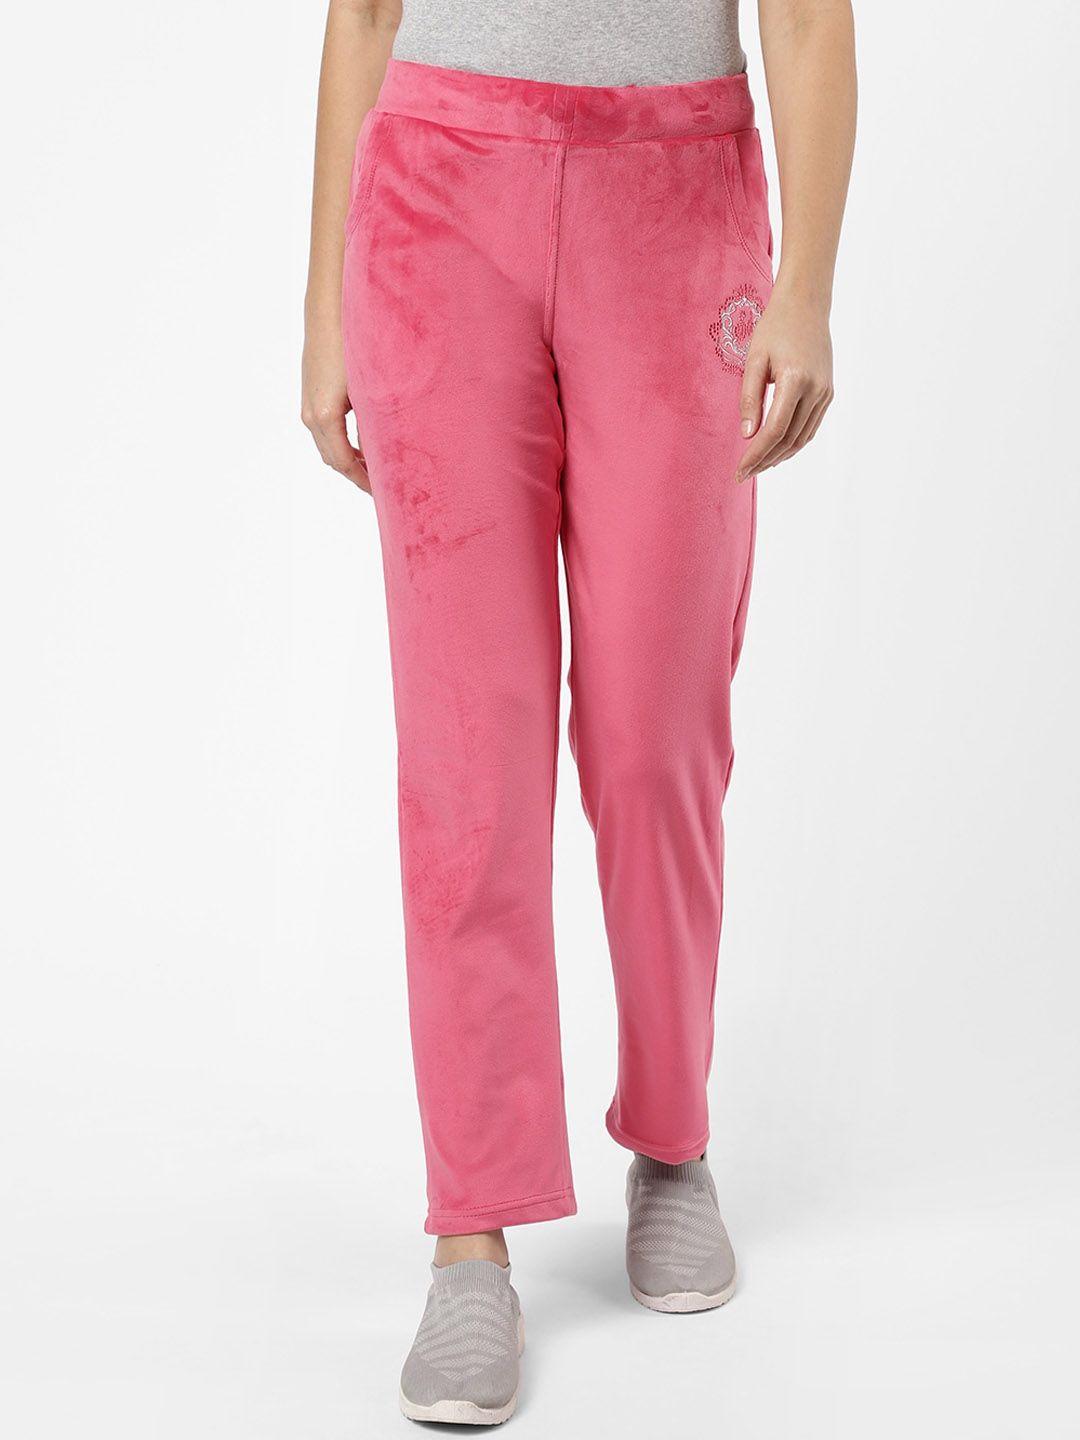 sweet dreams women pink solid lounge pants